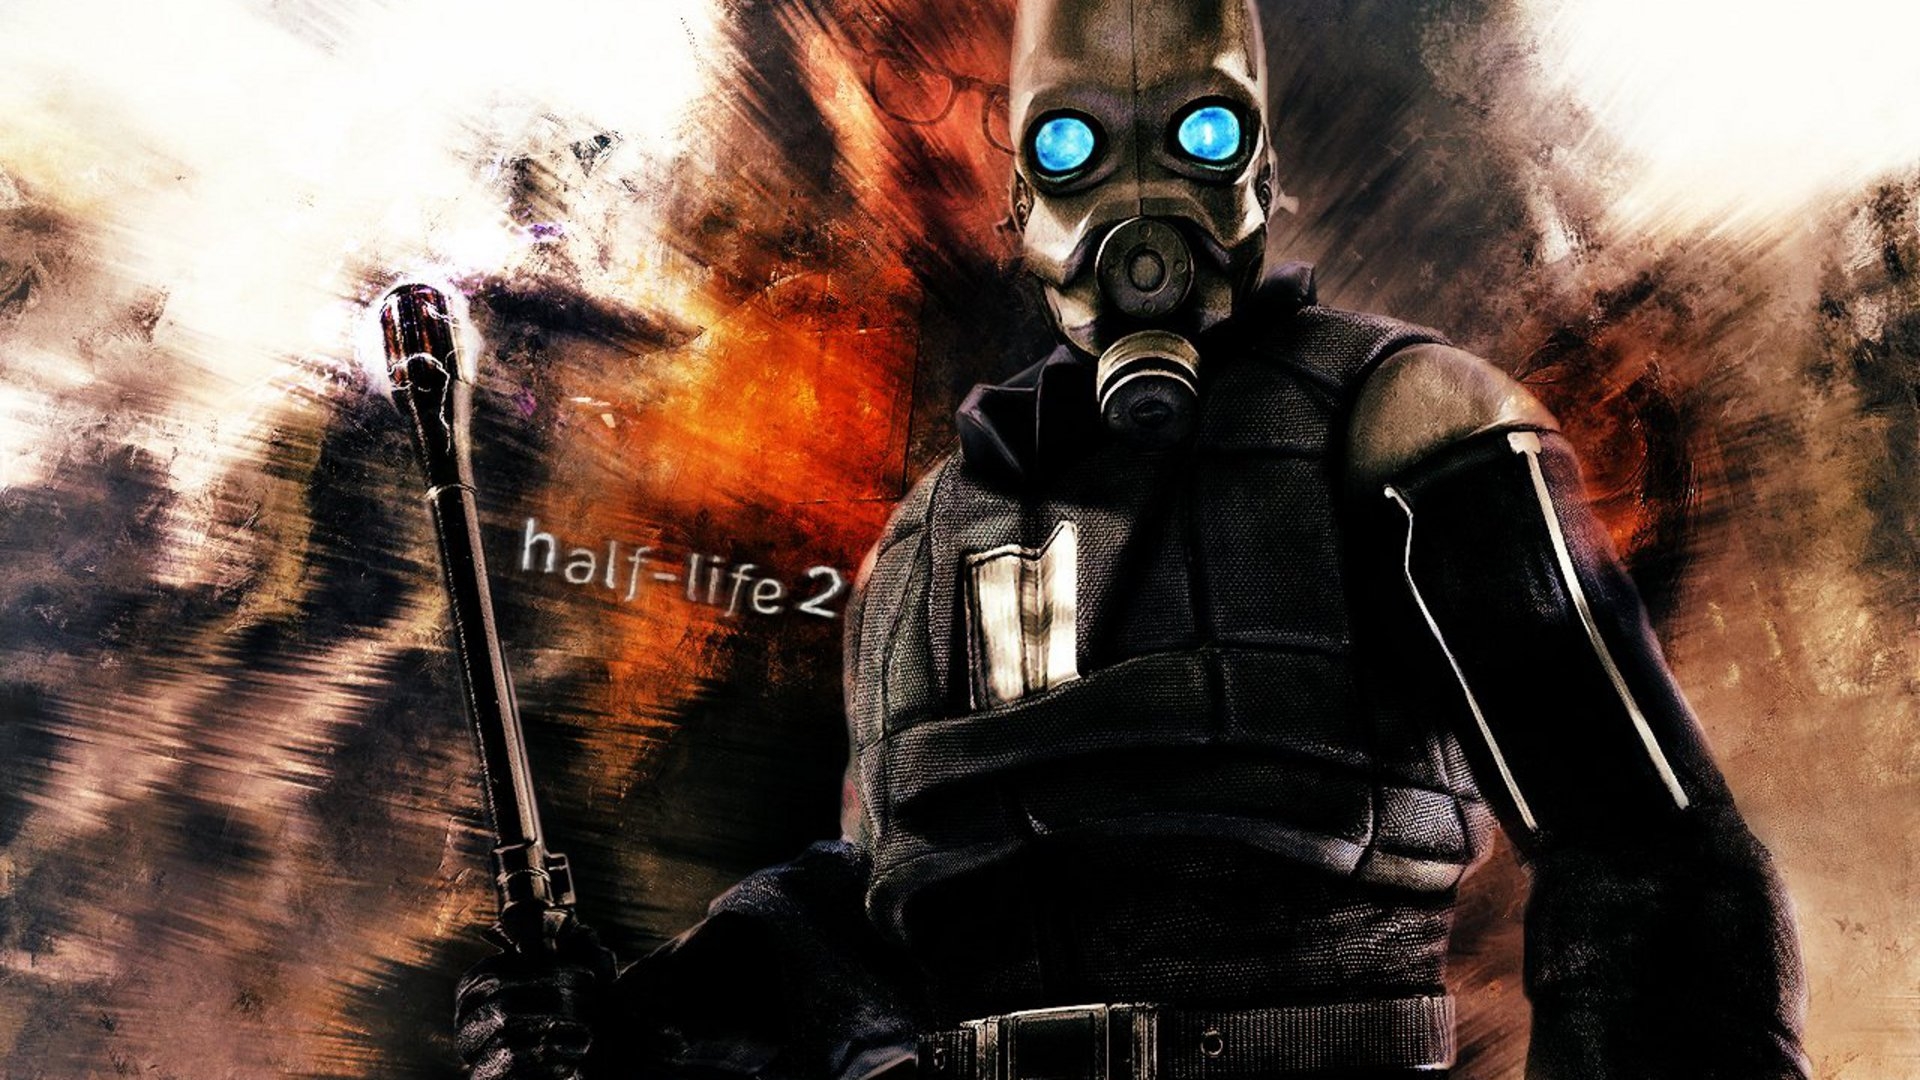 Half-Life 2 game